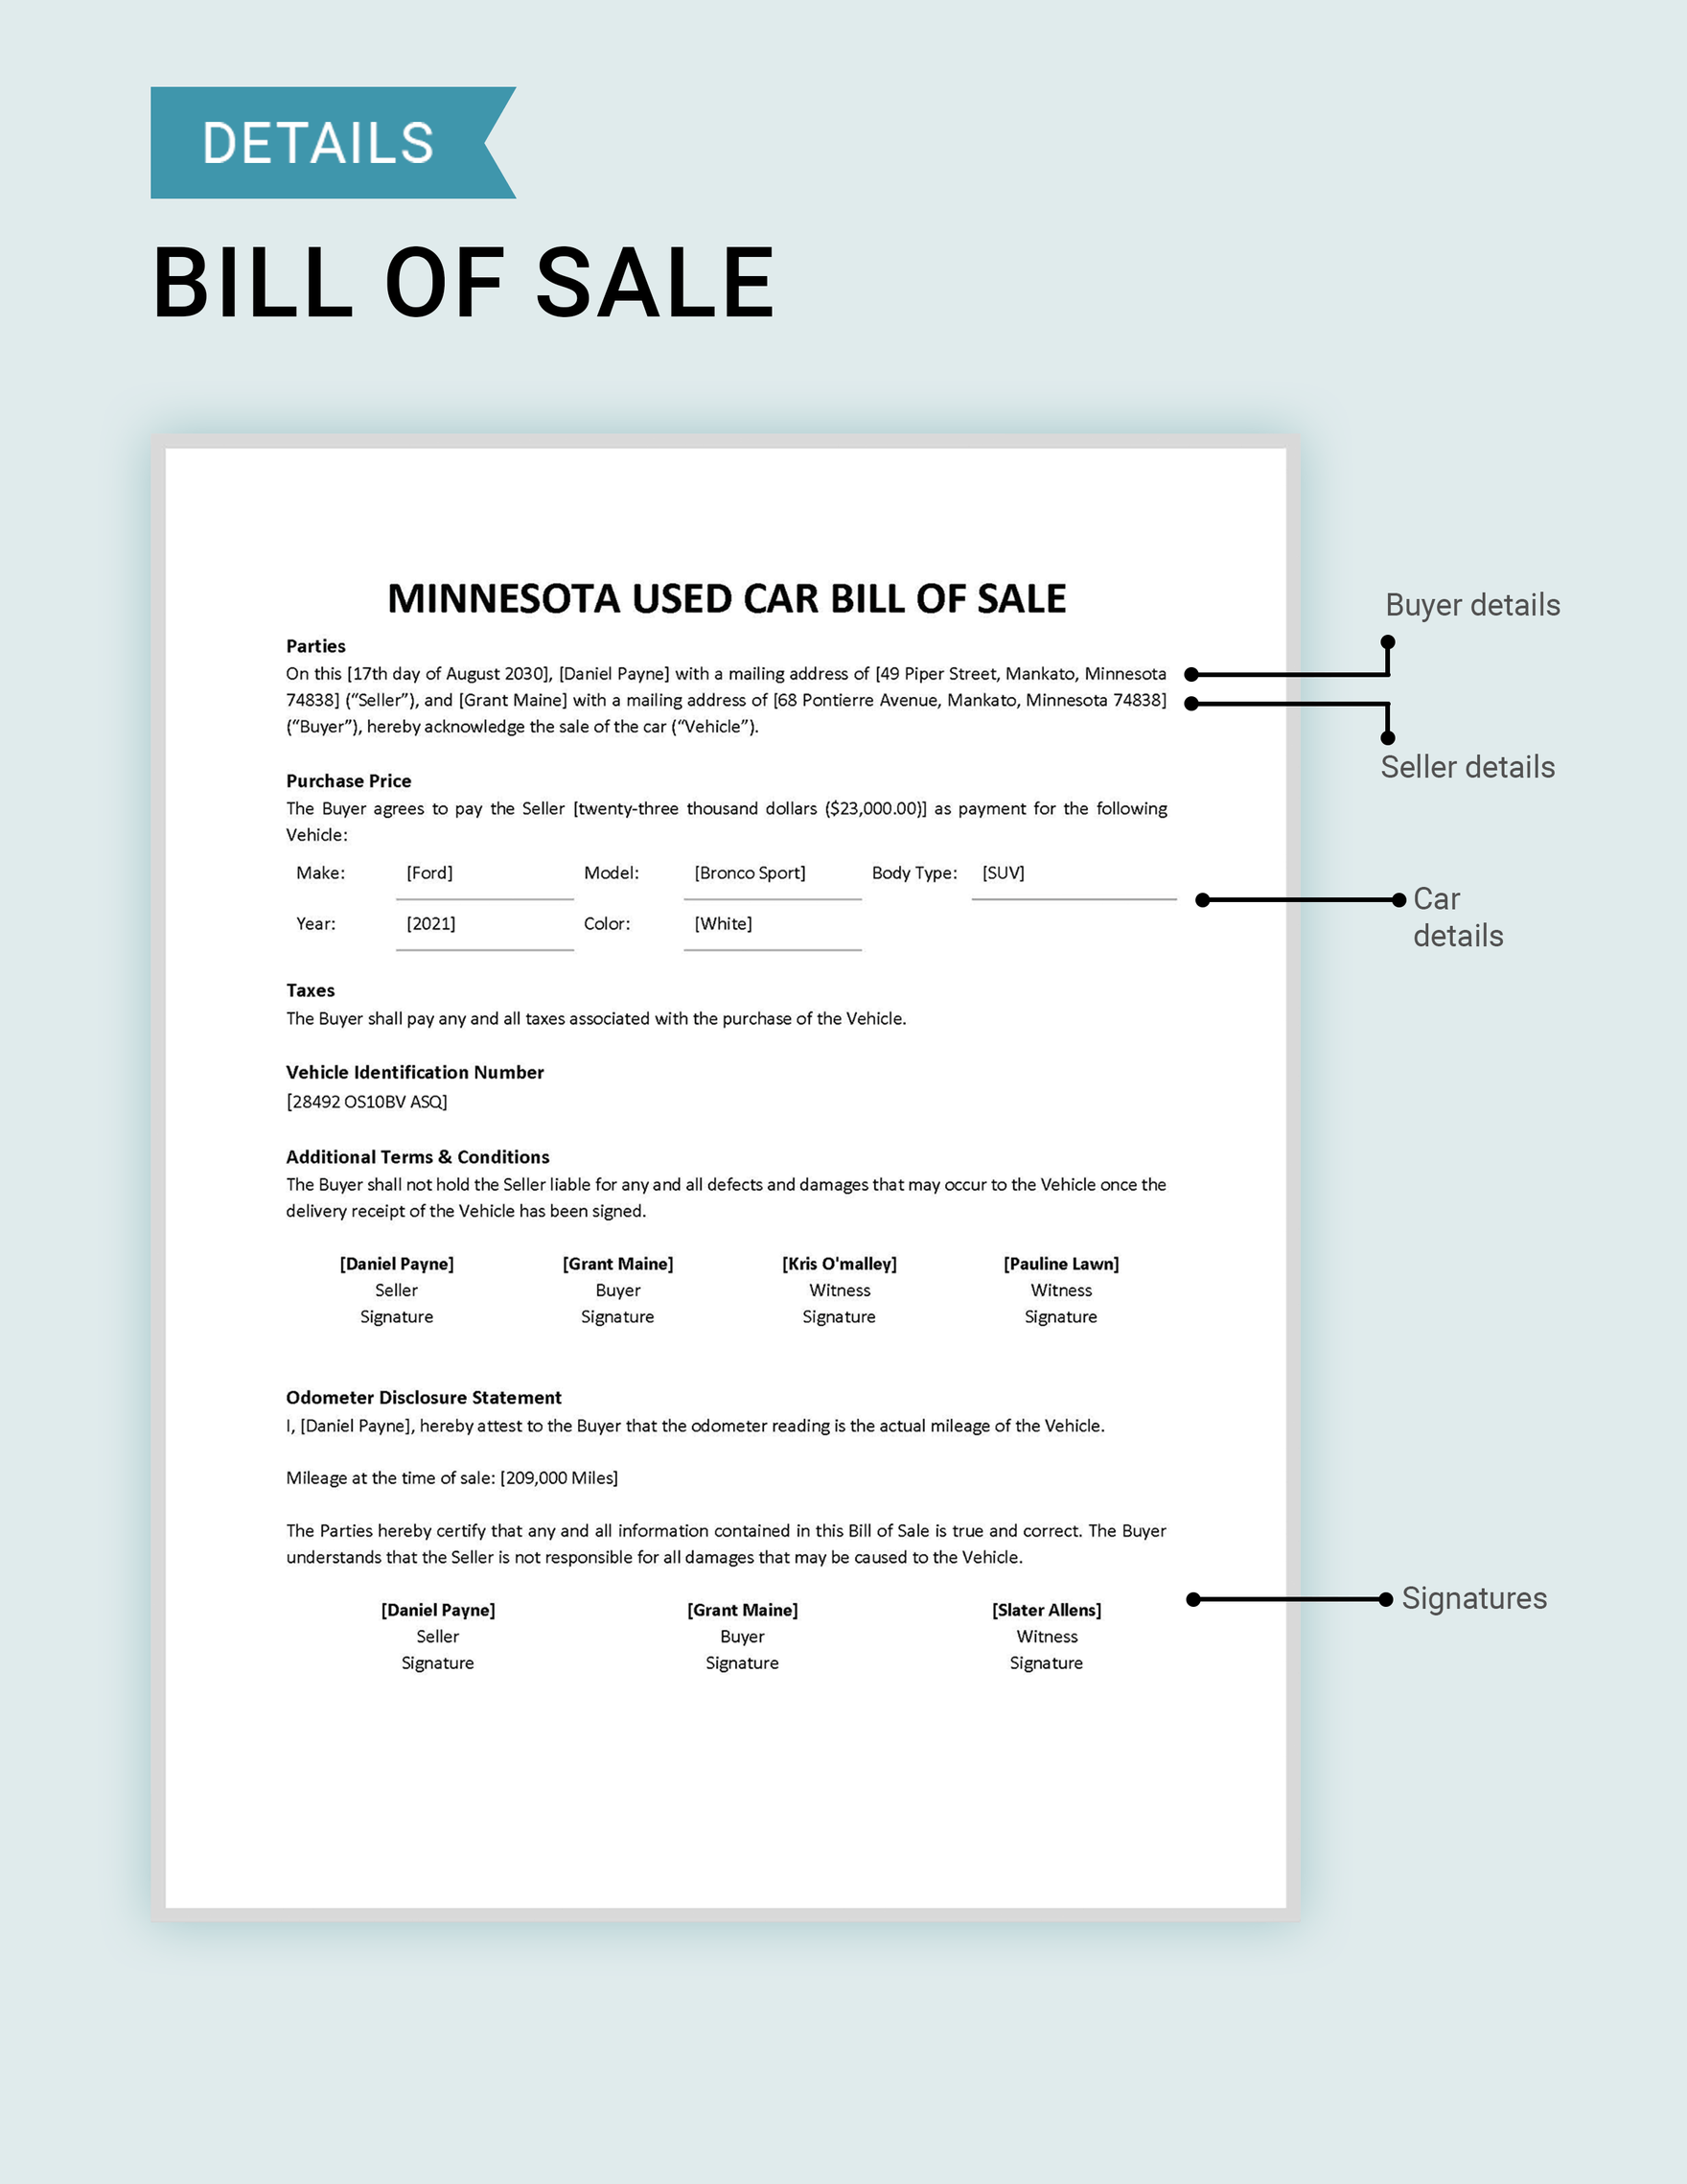 Minnesota Used Car Bill of Sale Template